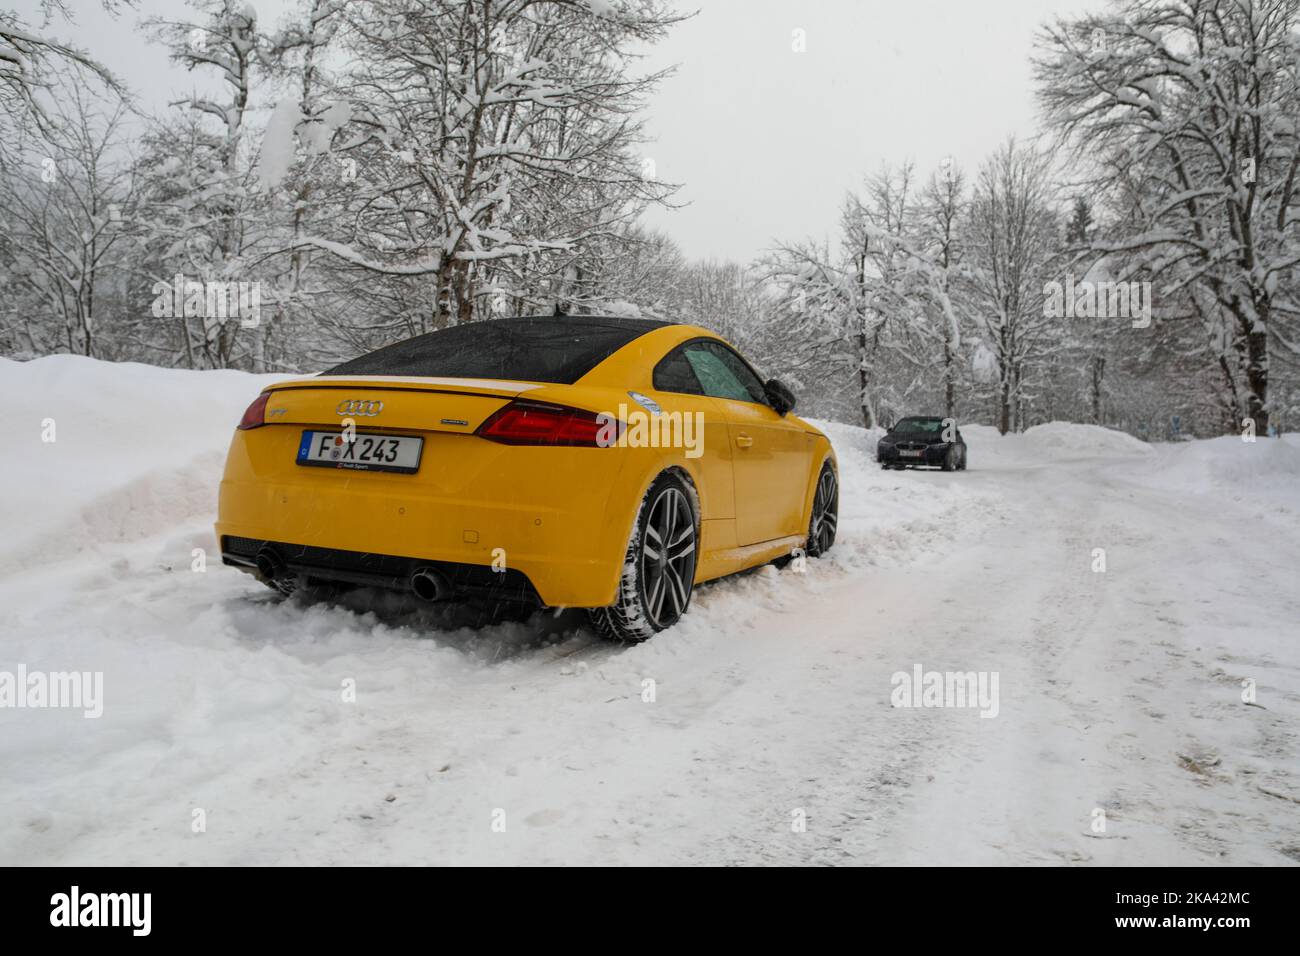 https://c8.alamy.com/comp/2KA42MC/a-yellow-audi-tt-driving-through-snowy-road-with-a-car-spun-out-in-front-of-it-2KA42MC.jpg